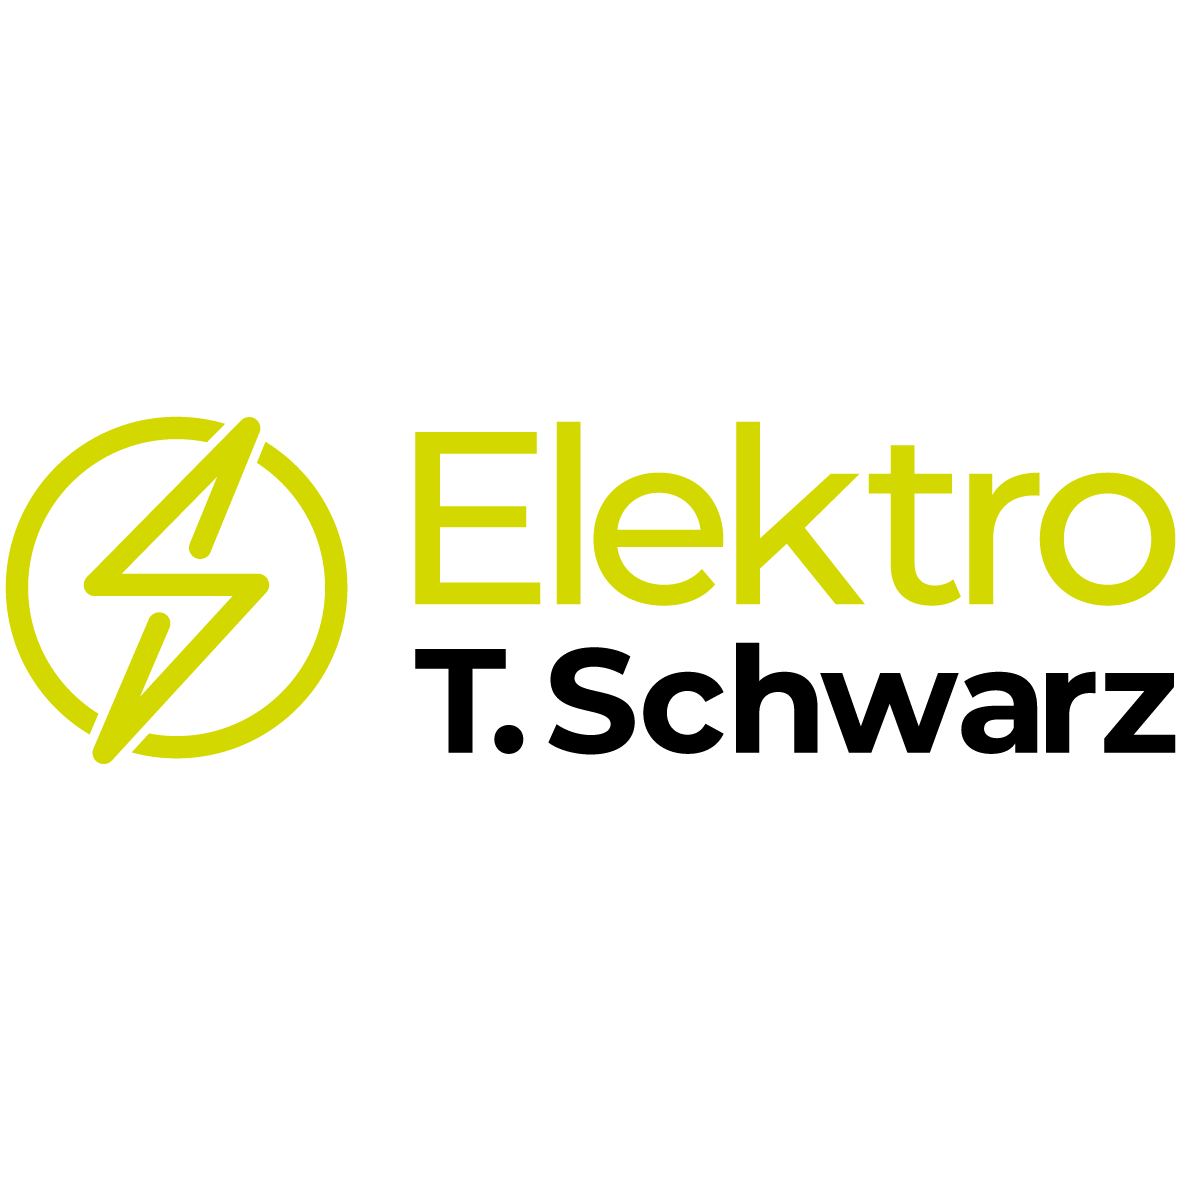 Elektro T. Schwarz in Willstätt - Logo